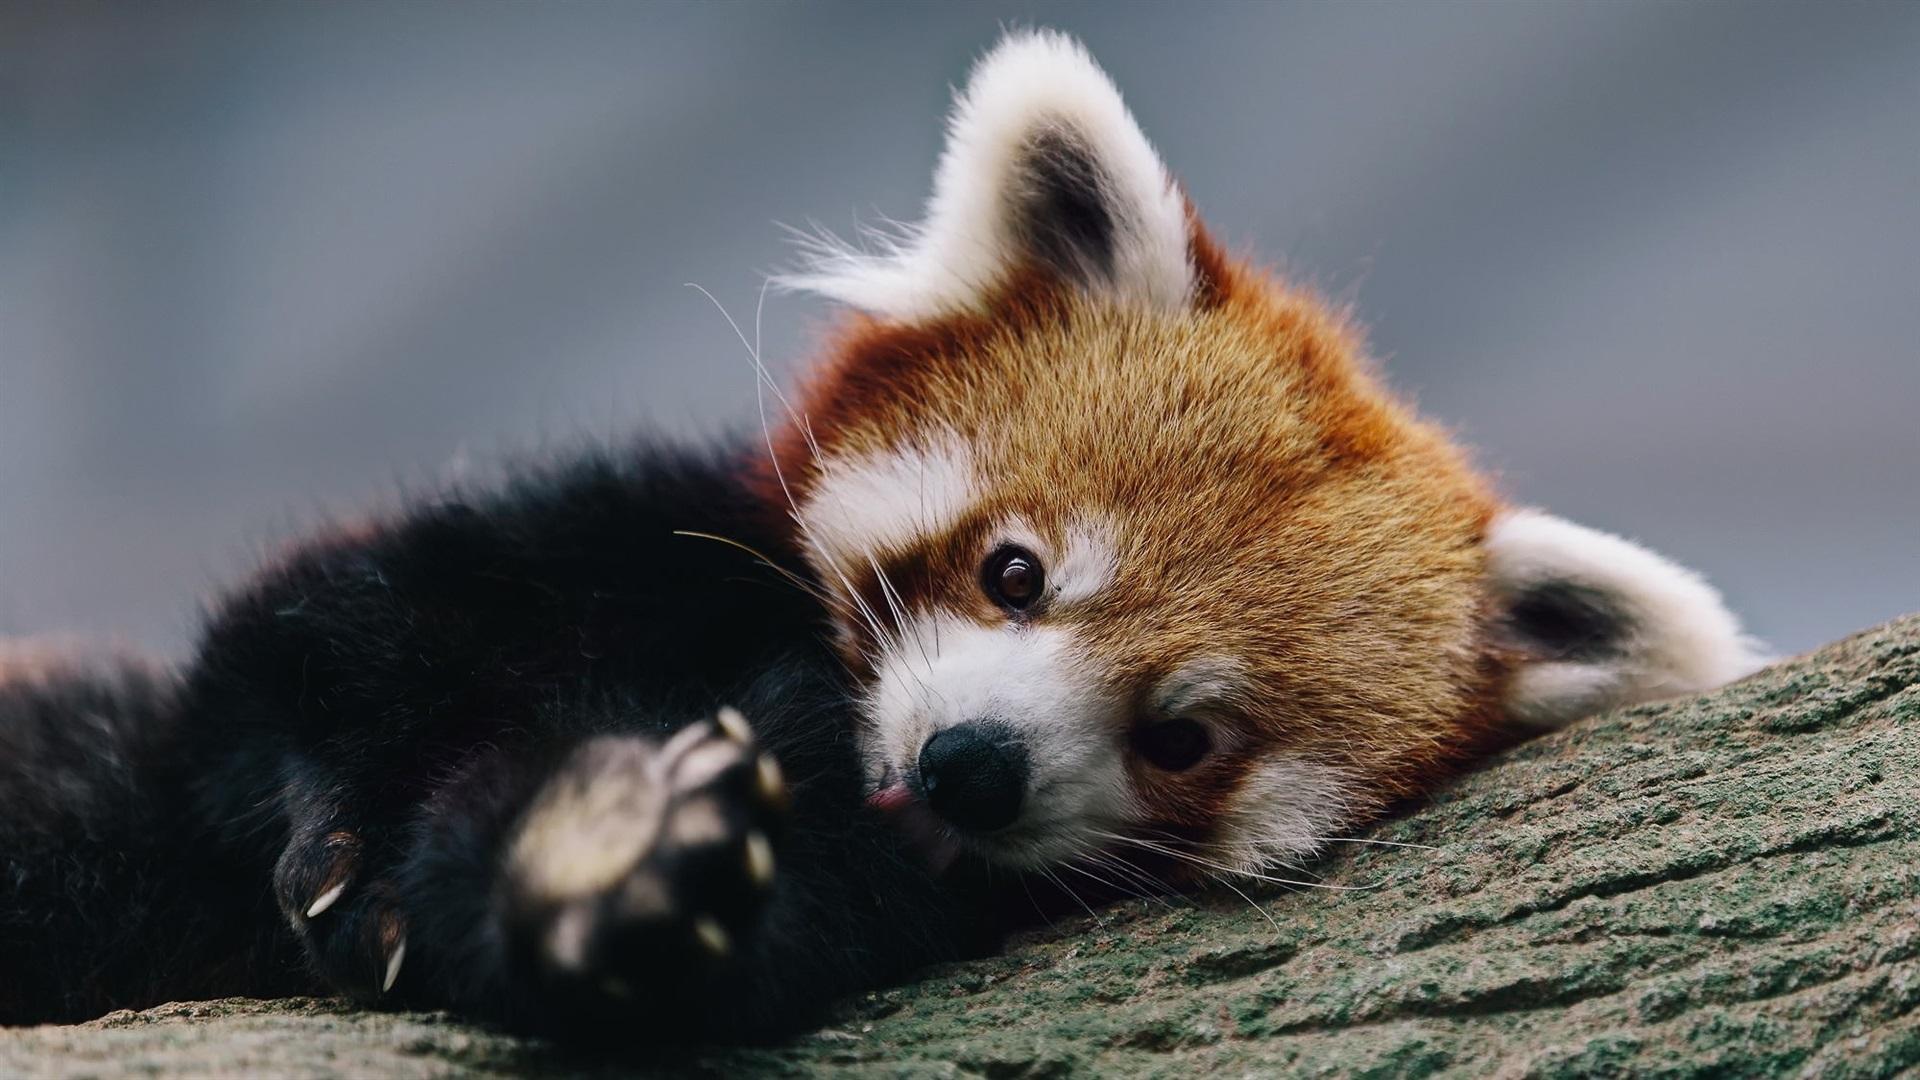 Wallpaper Cute red panda rest in tree 1920x1080 Full HD 2K Picture